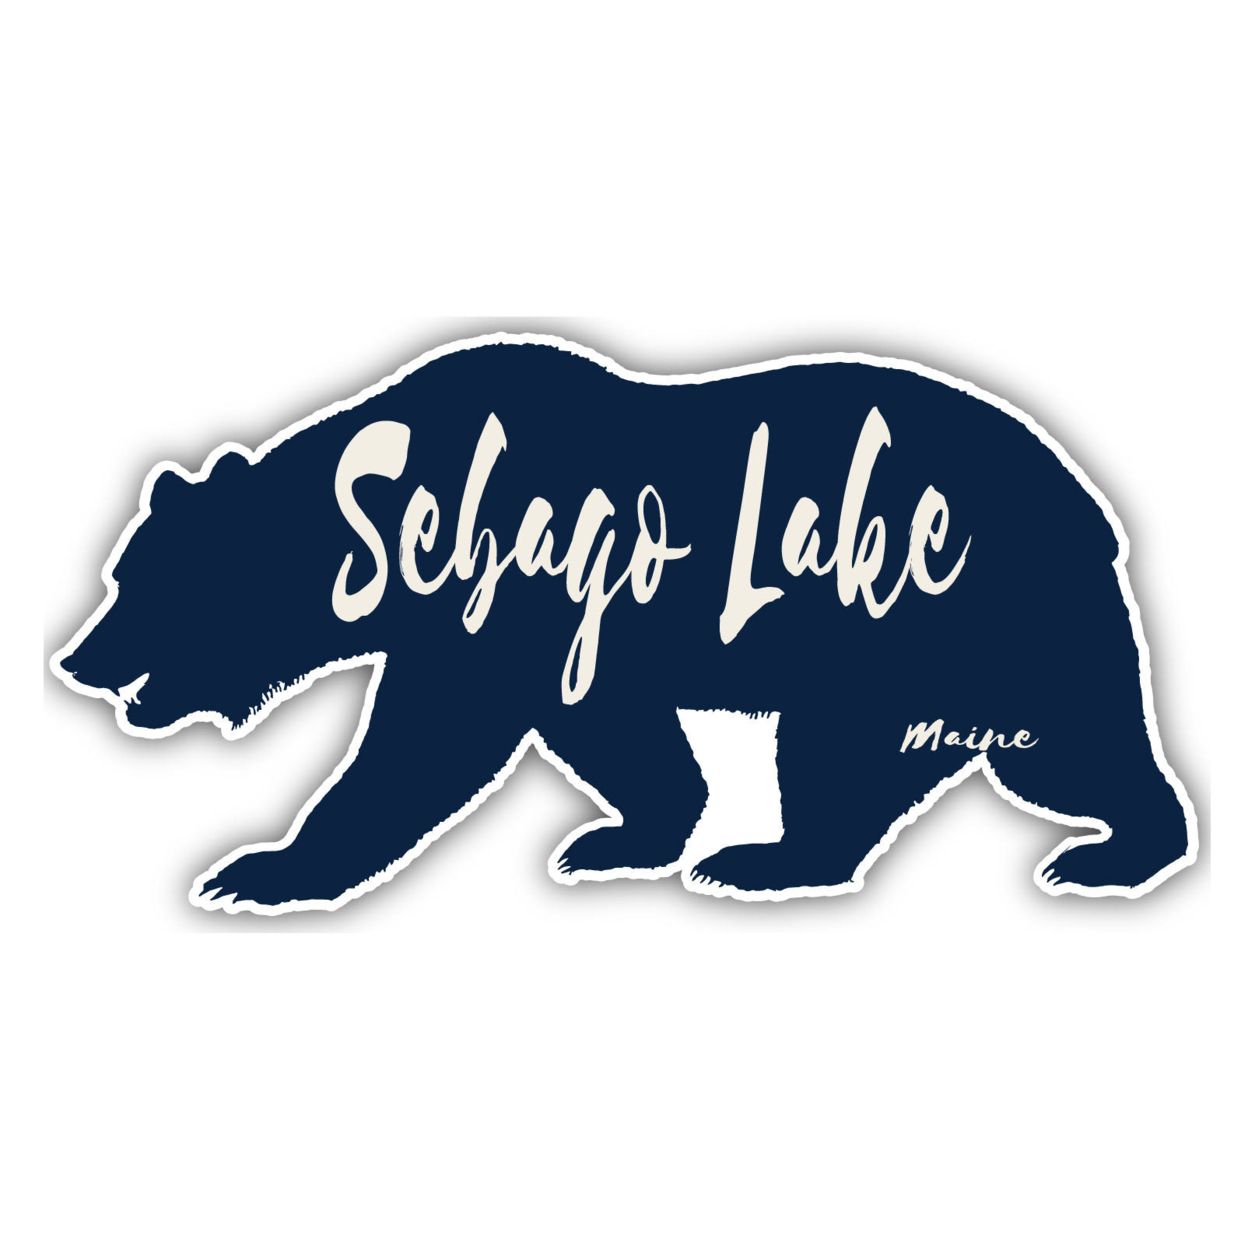 Sebago Lake Maine Souvenir Decorative Stickers (Choose Theme And Size) - Single Unit, 2-Inch, Bear